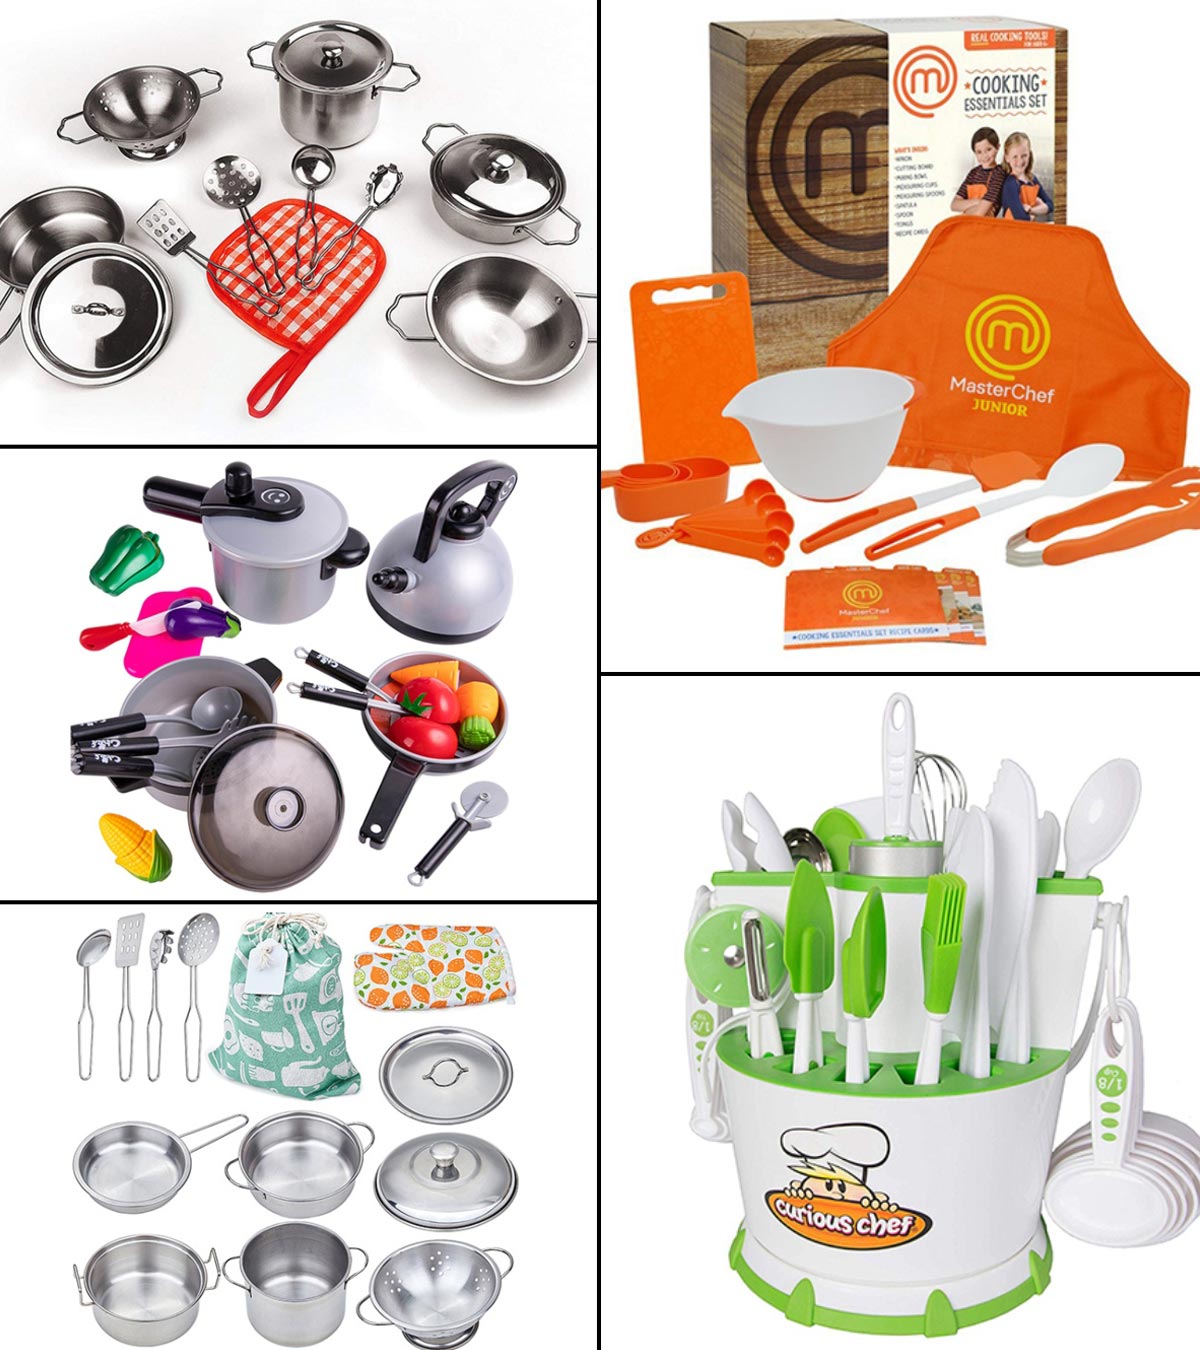 Kitchen Tools For Kids  Best Kids Cooking Utensils & Tools